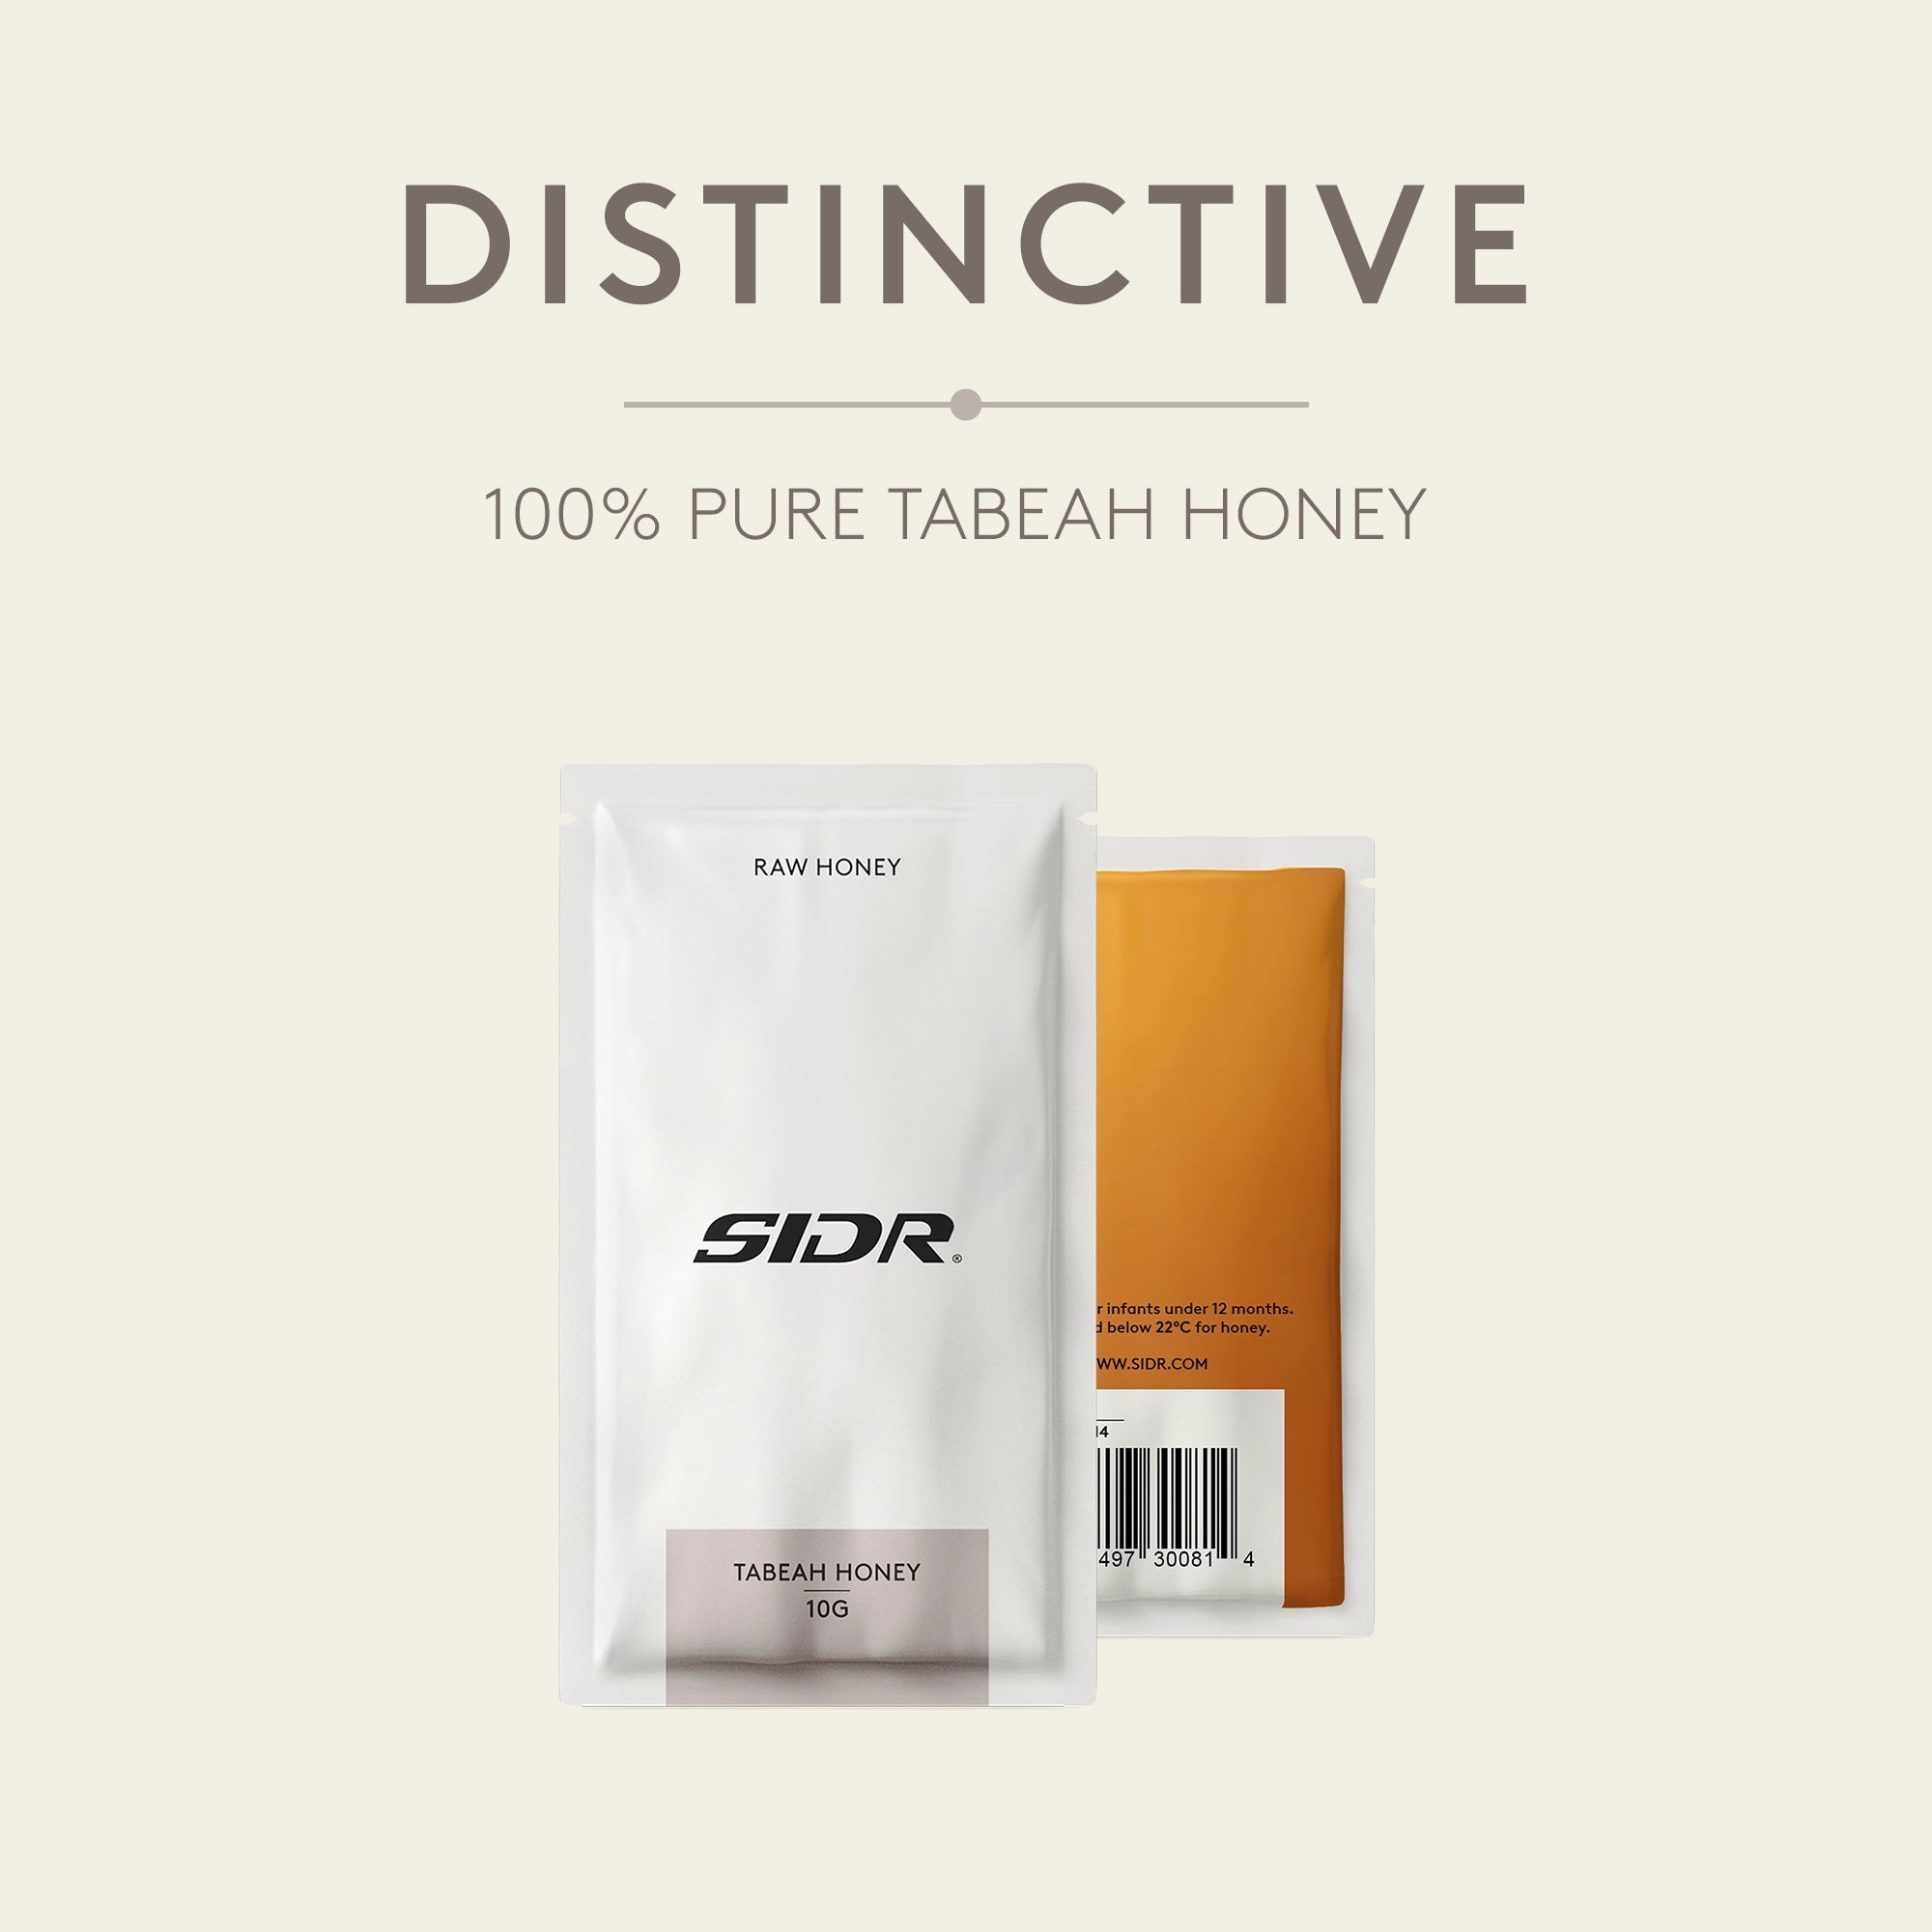 sidr tabeah honey packet distinctive